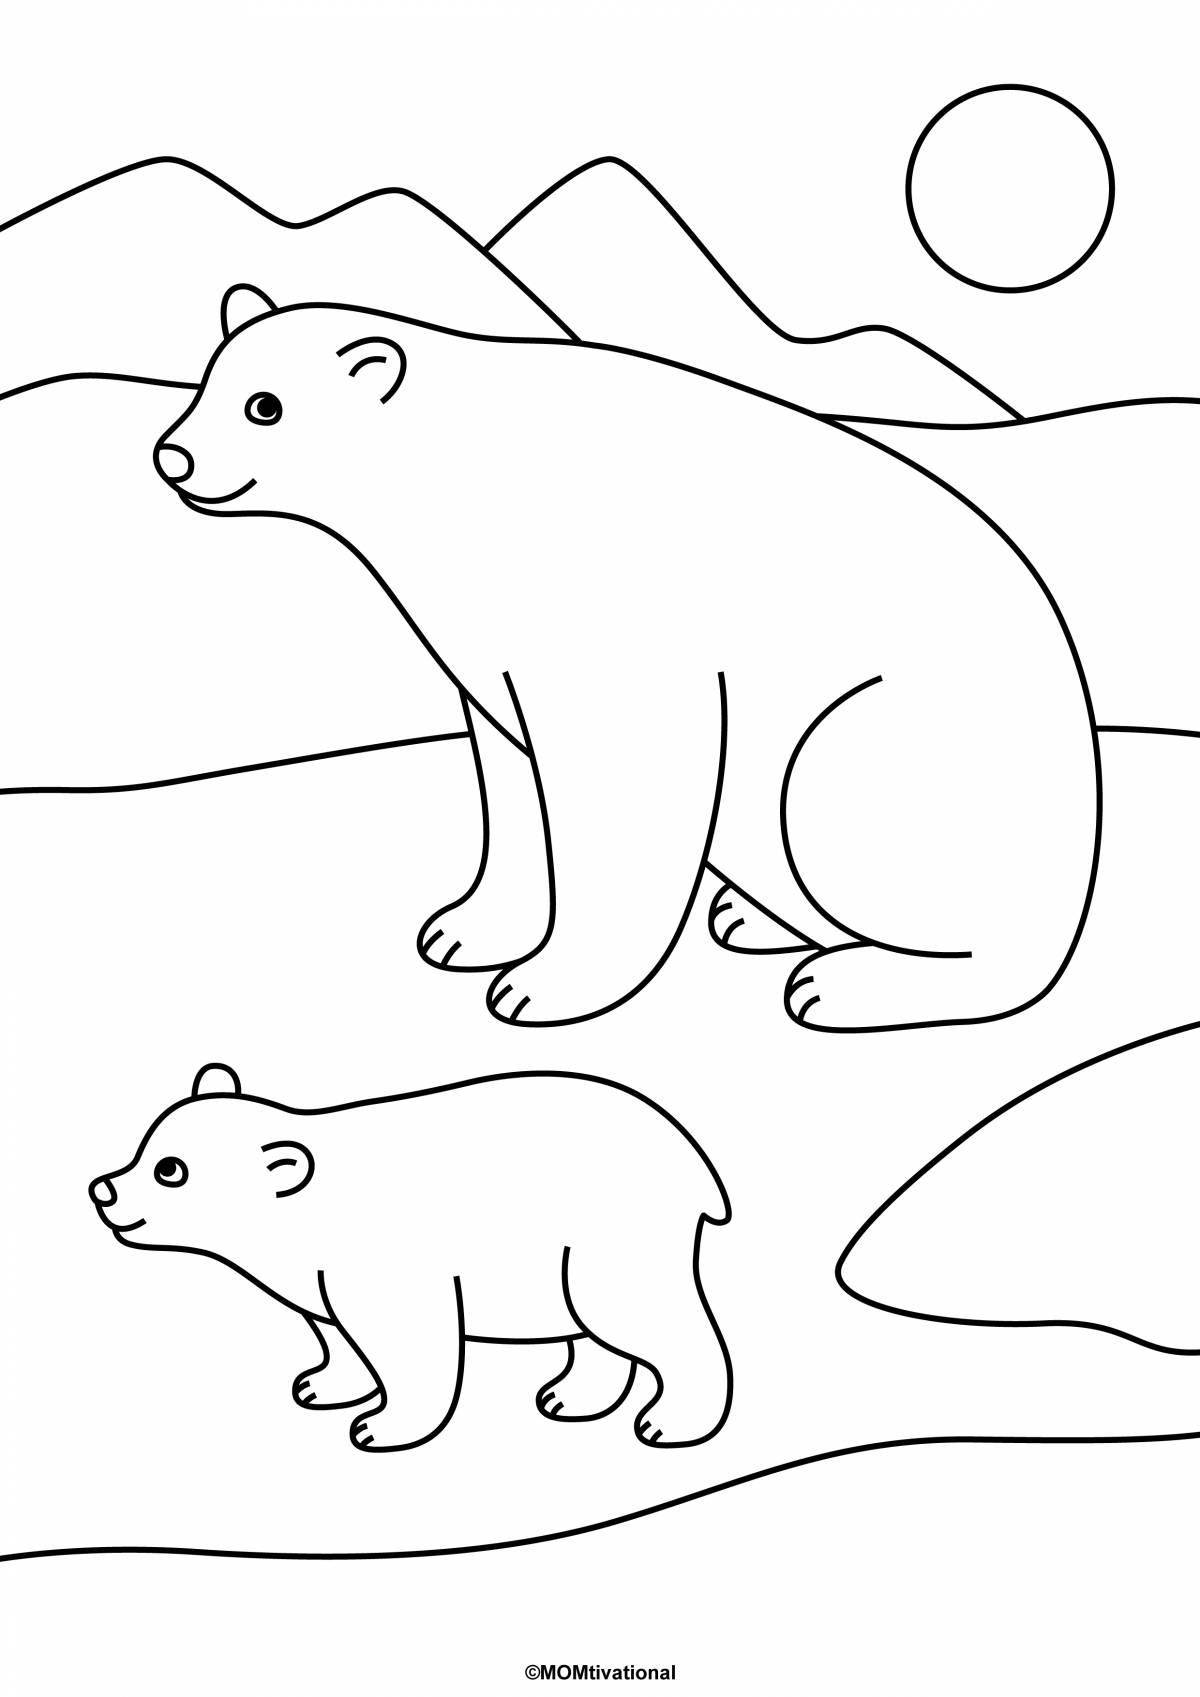 Colouring polar bear for children 3-4 years old